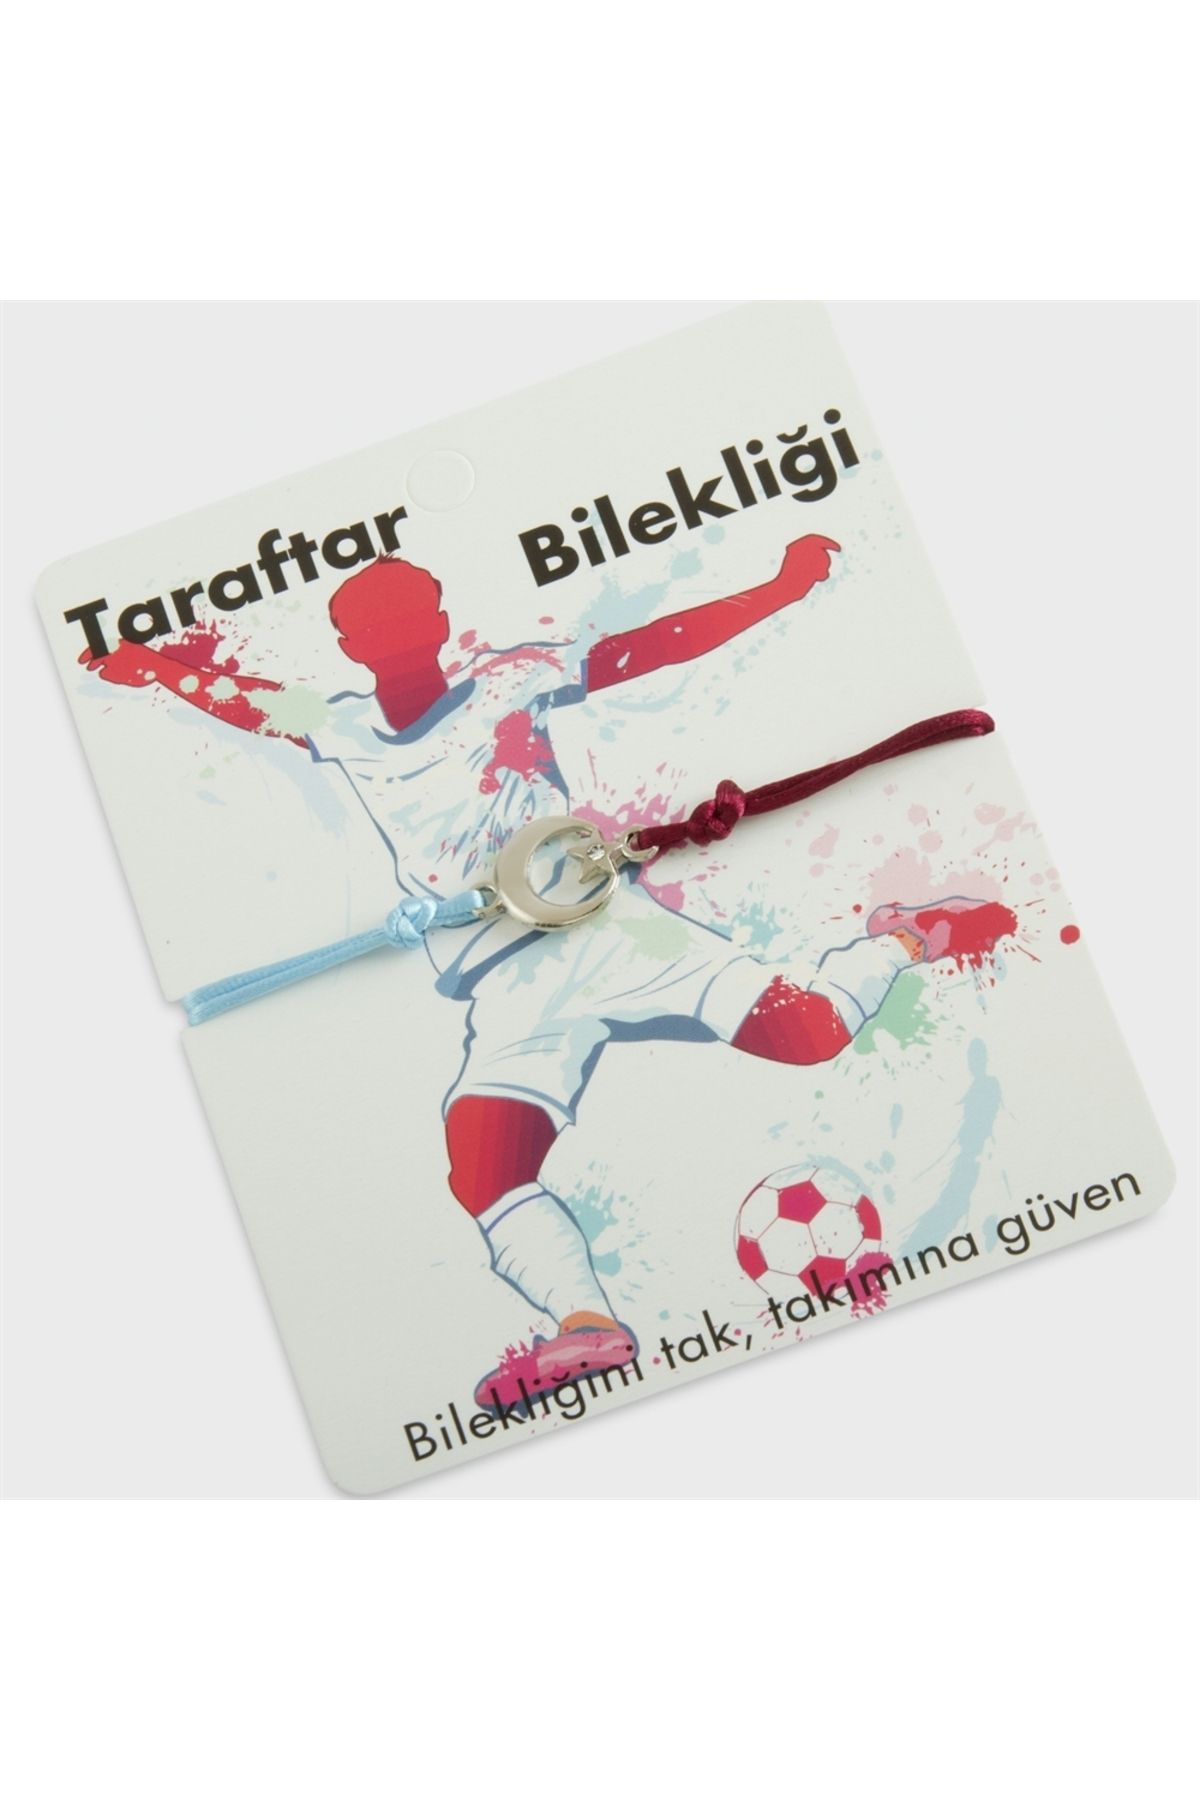 LA TINY AKSESUAR Ay Yıldız Trabzonspor Taraftar Bilekliği